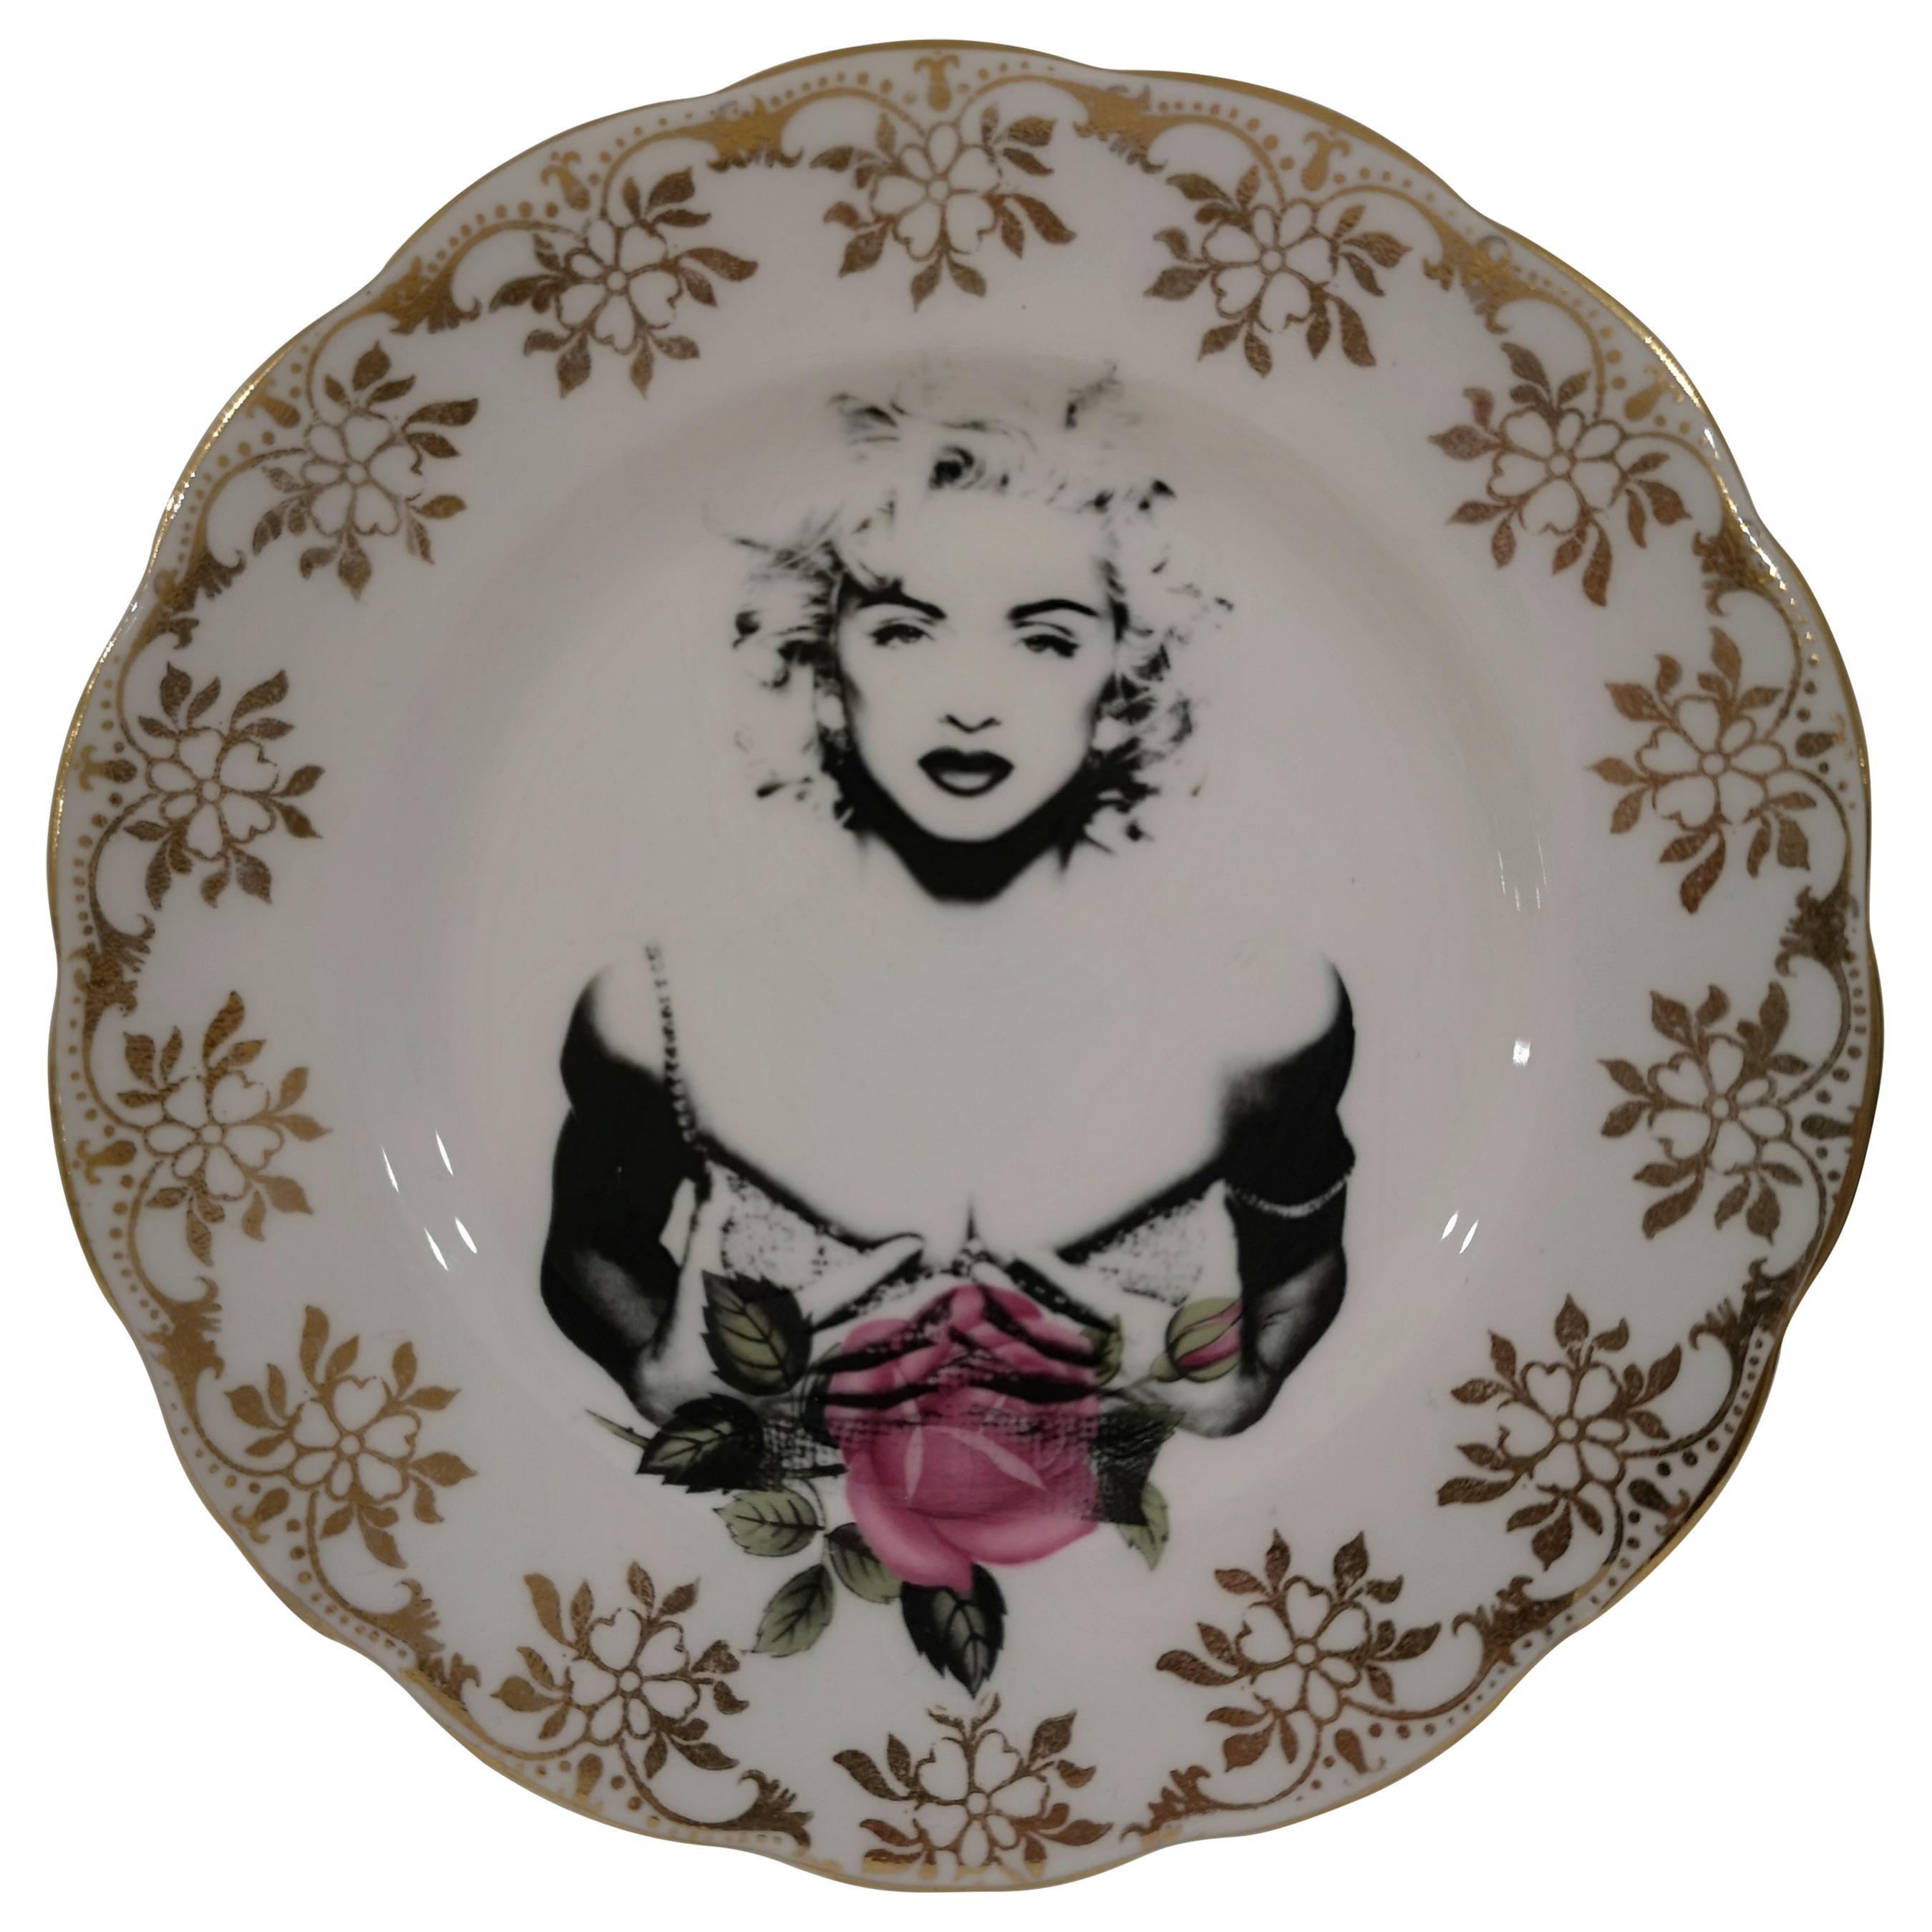 Madonna side plate